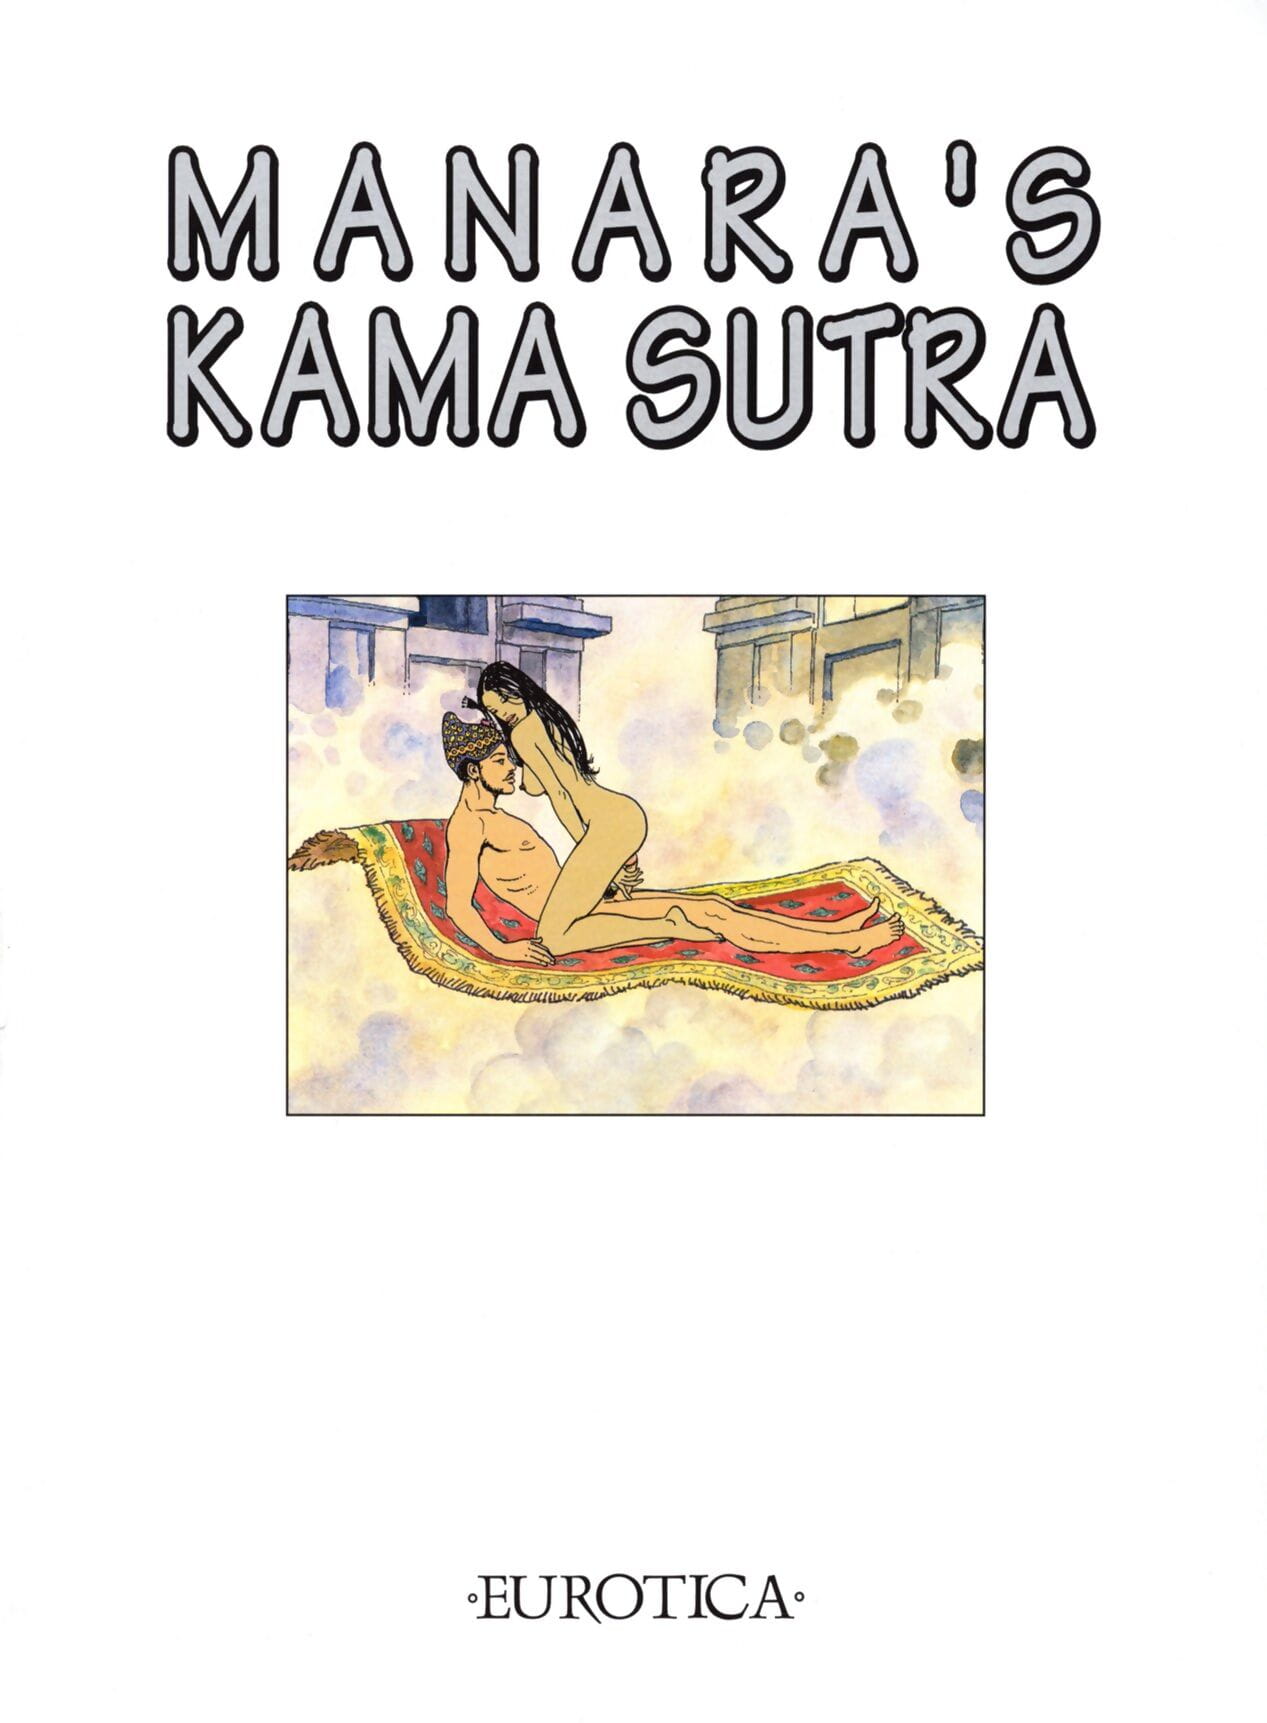 Kama Sutra page 1